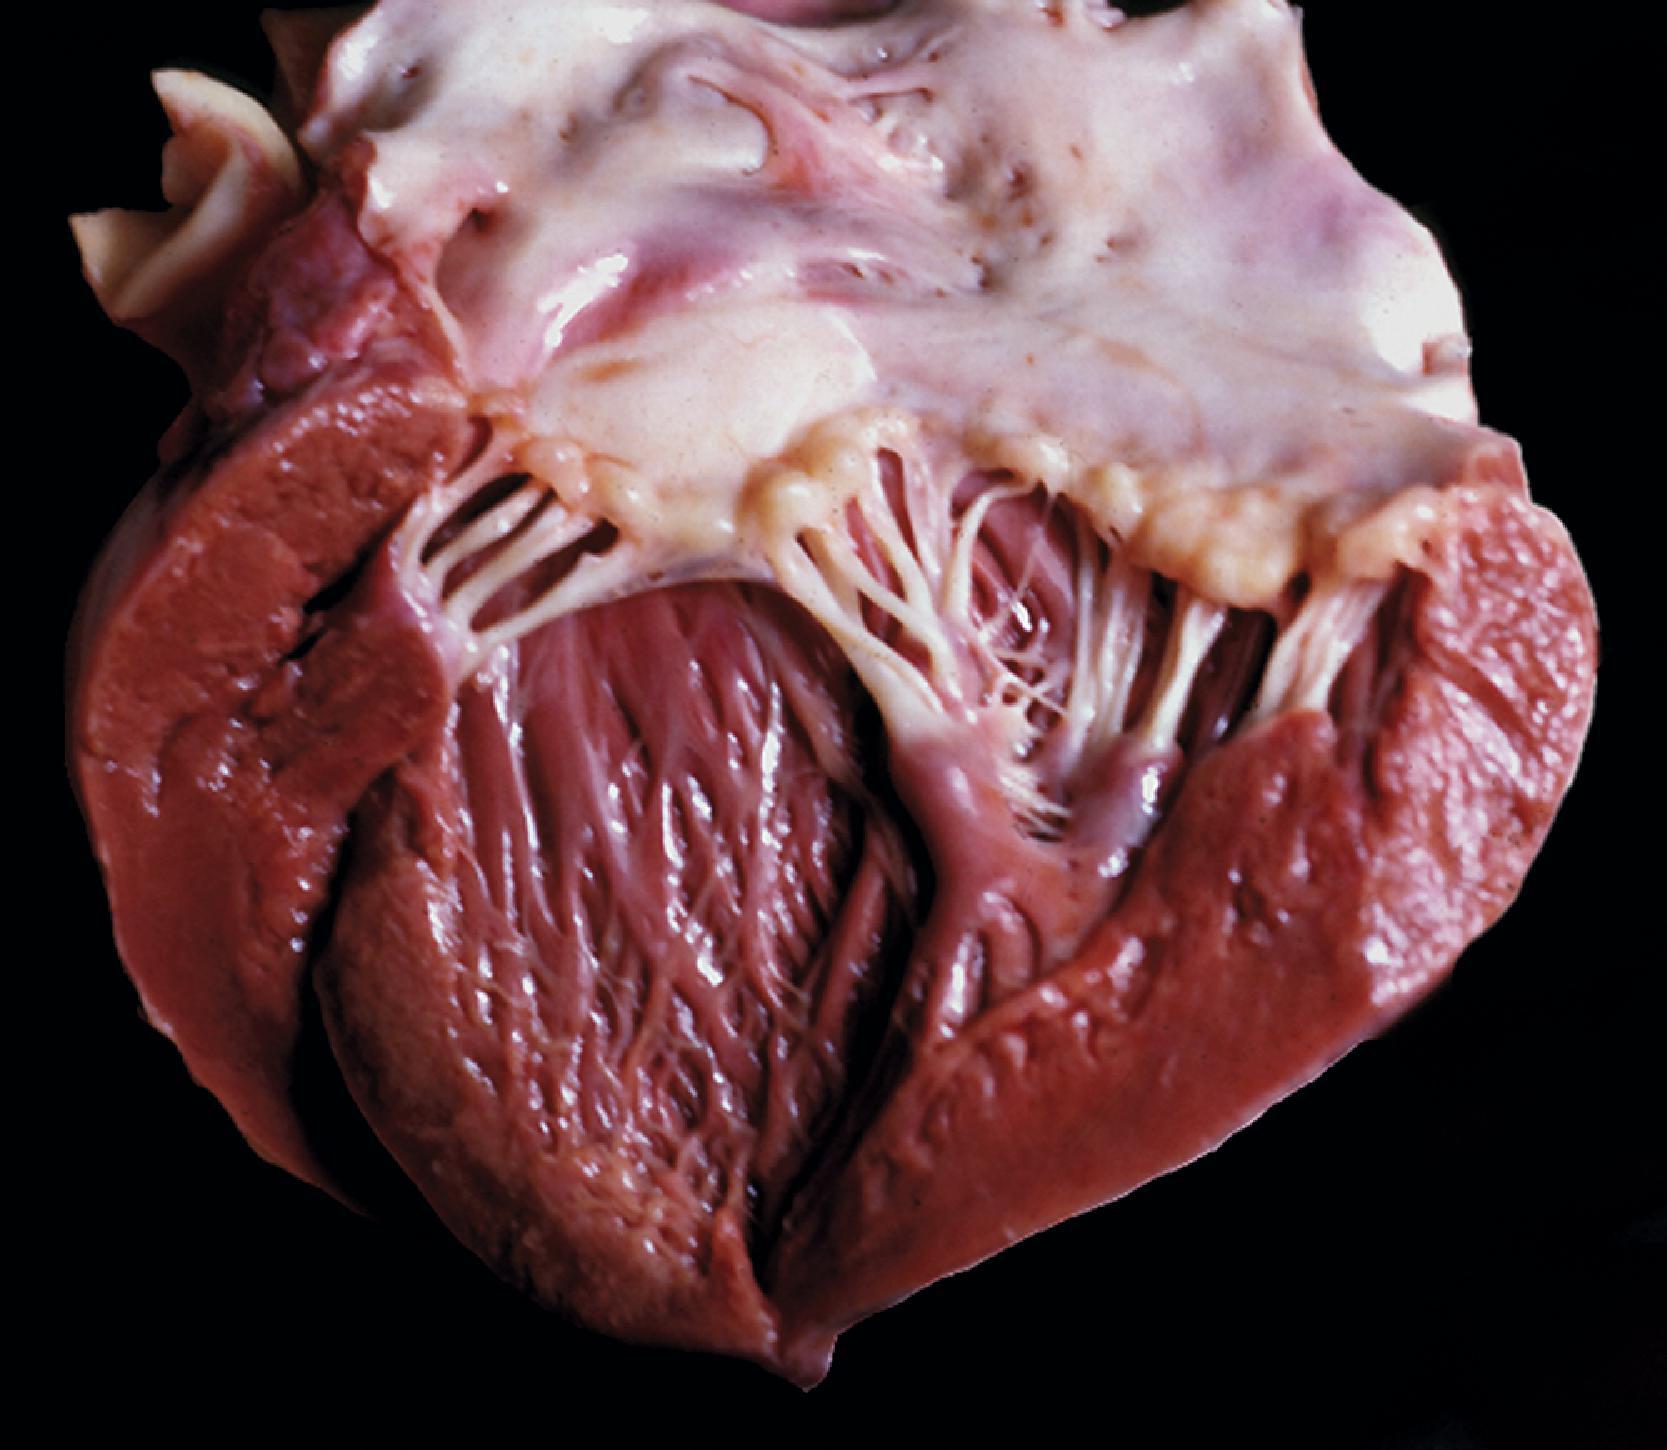 FIGure 8.25, Myocardial hypertrophy and thickening of endocardium, cardiac valves, and chordae tendineae in mucopolysaccharidosis.